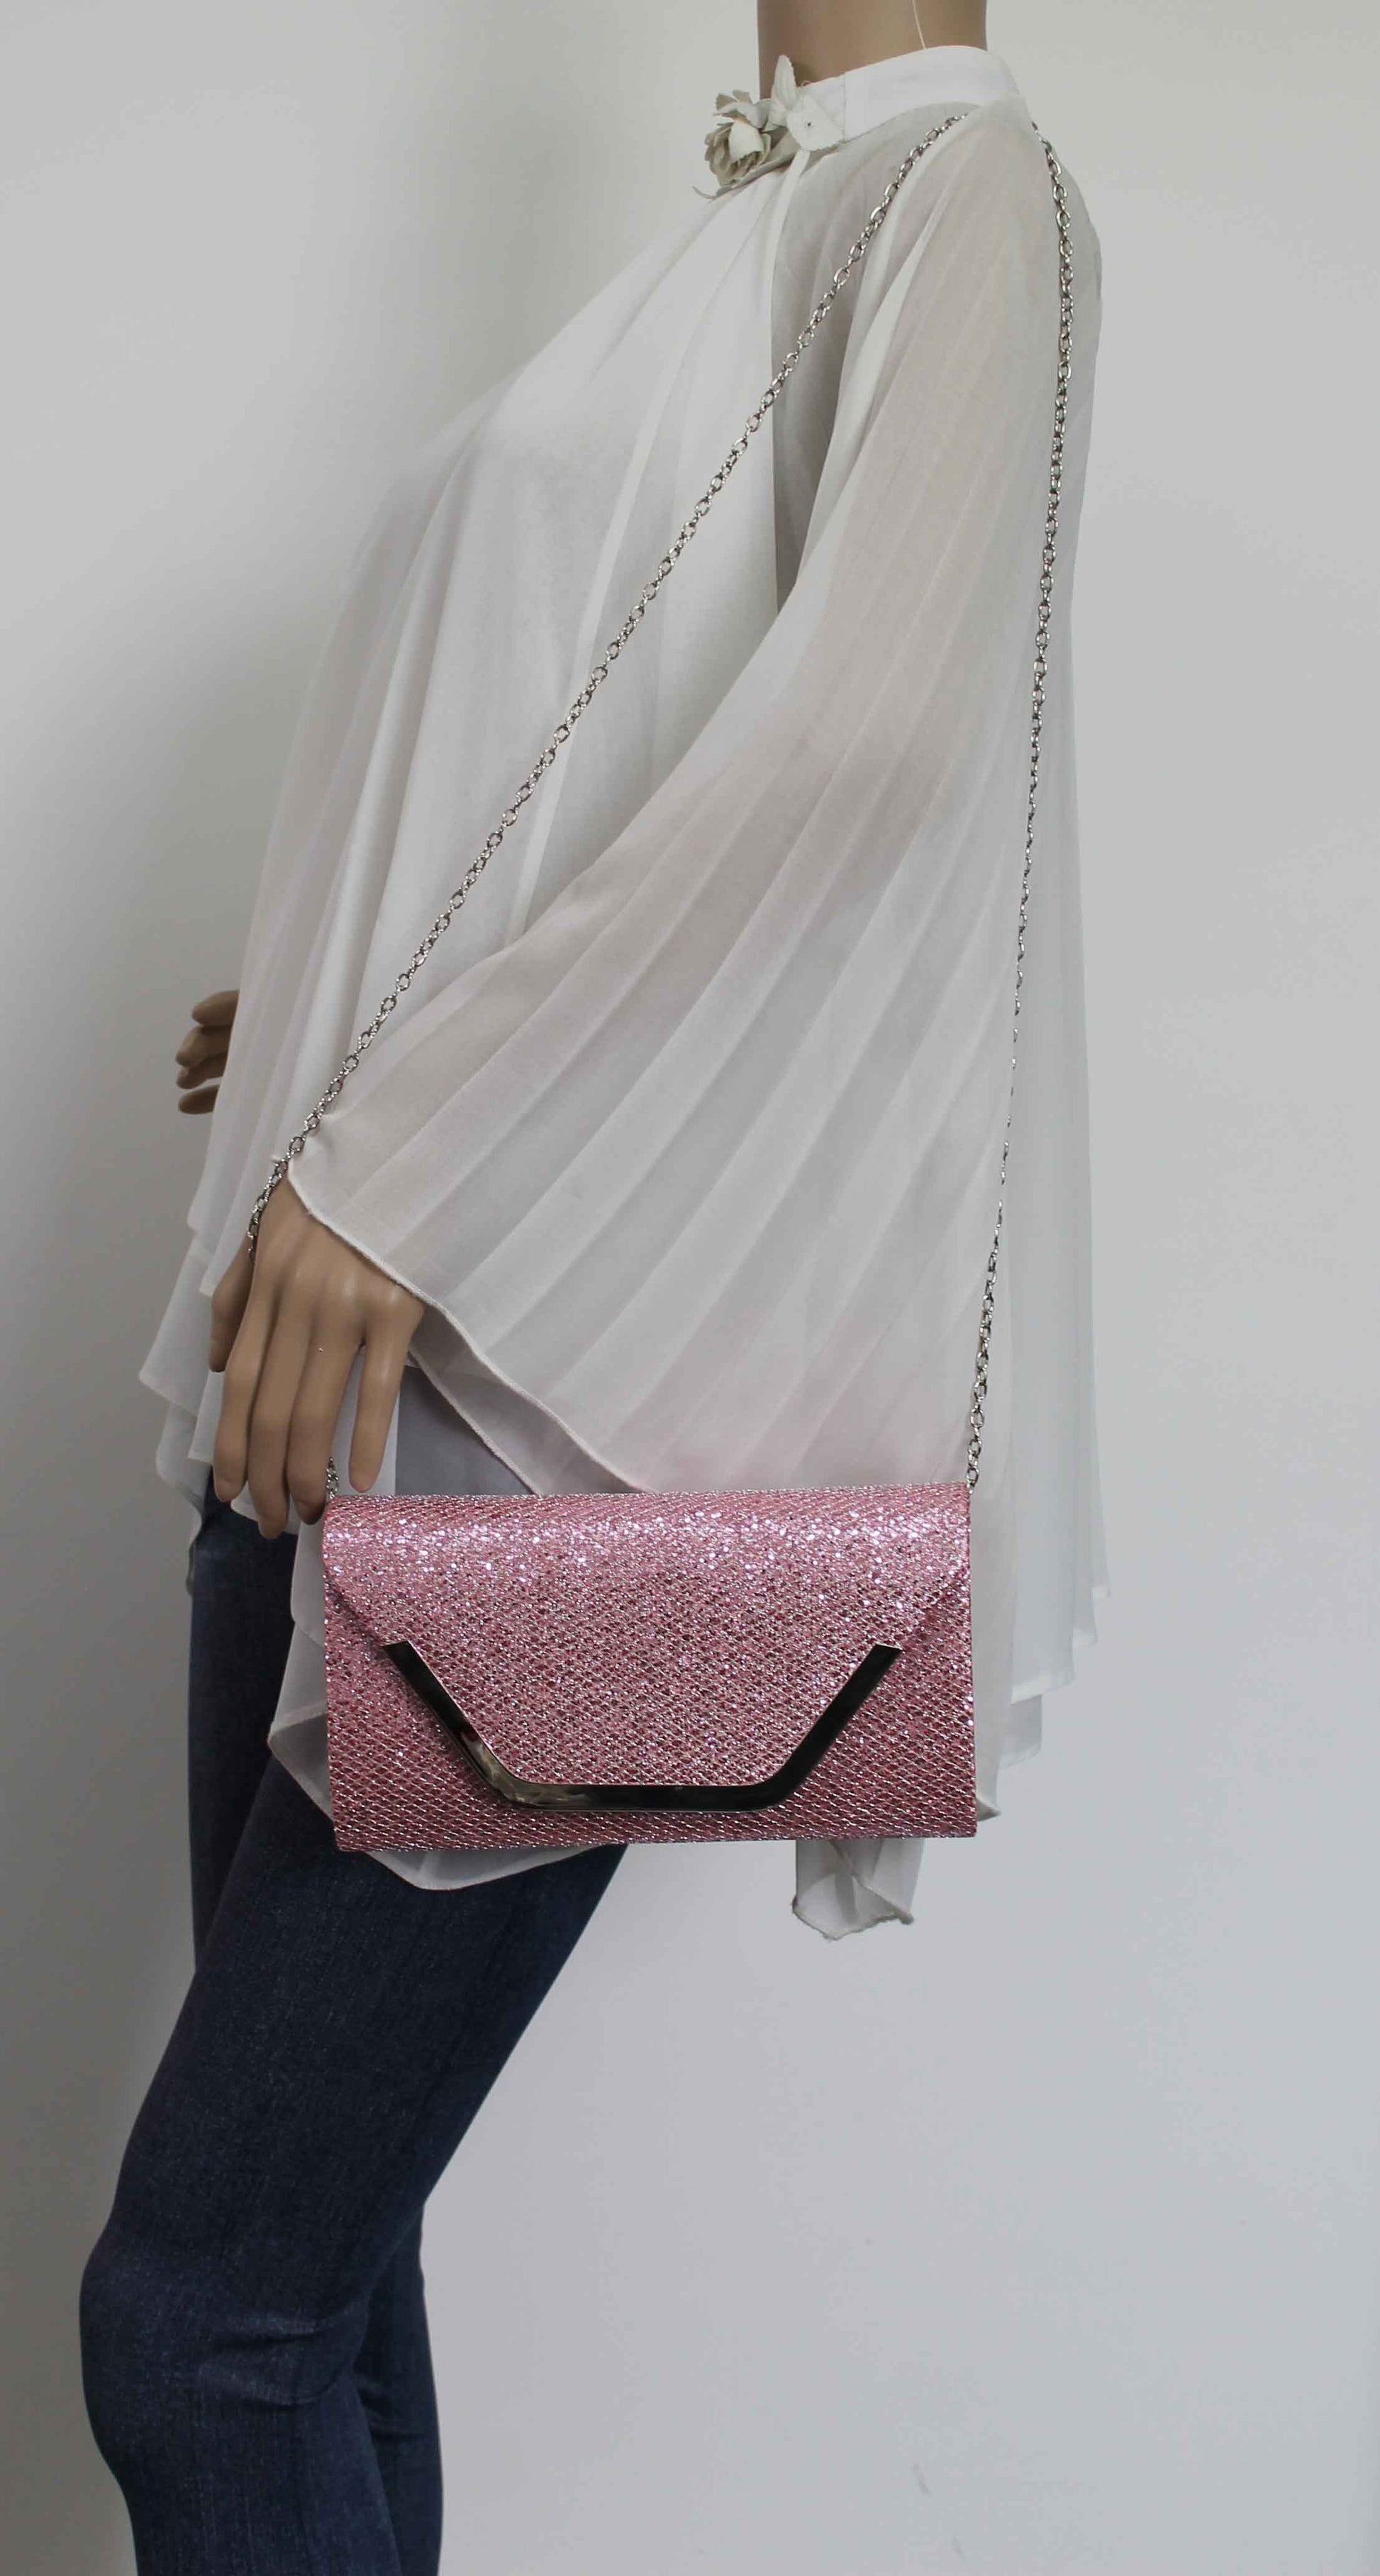 SWANKYSWANS Kamila Clutch Bag Pink Cute Cheap Clutch Bag For Weddings School and Work